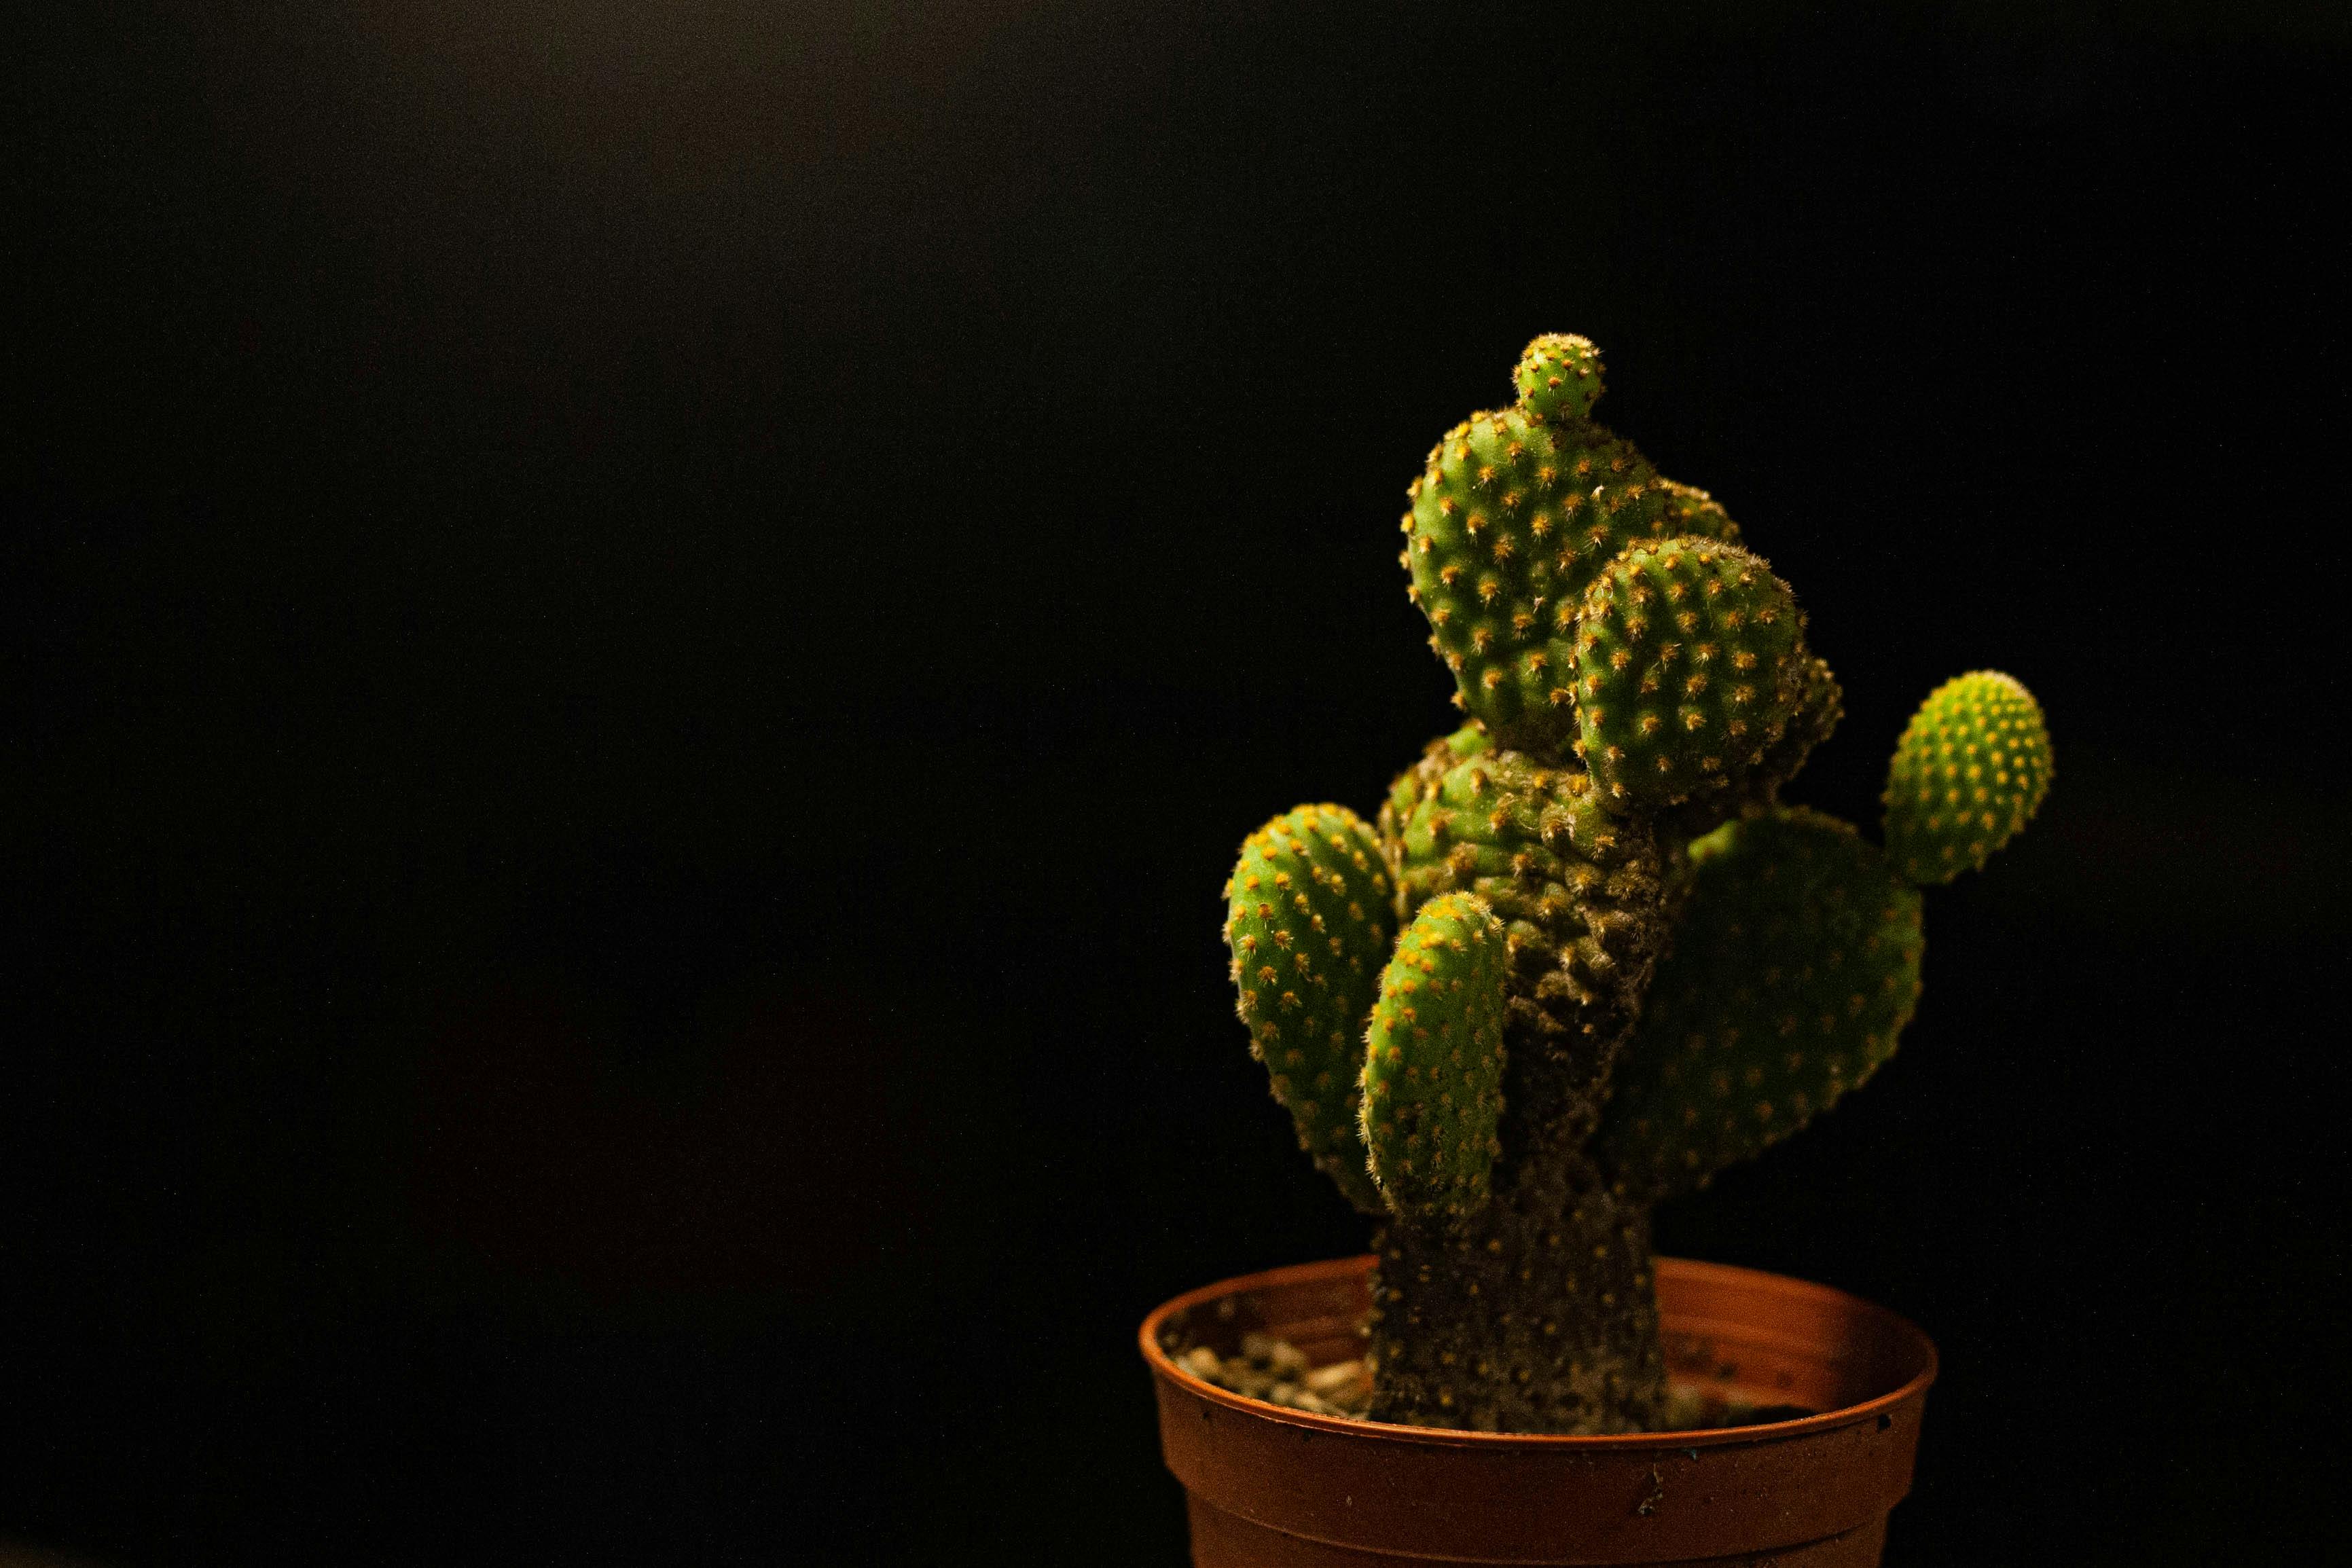 Green Cactus Plants · Free Stock Photo